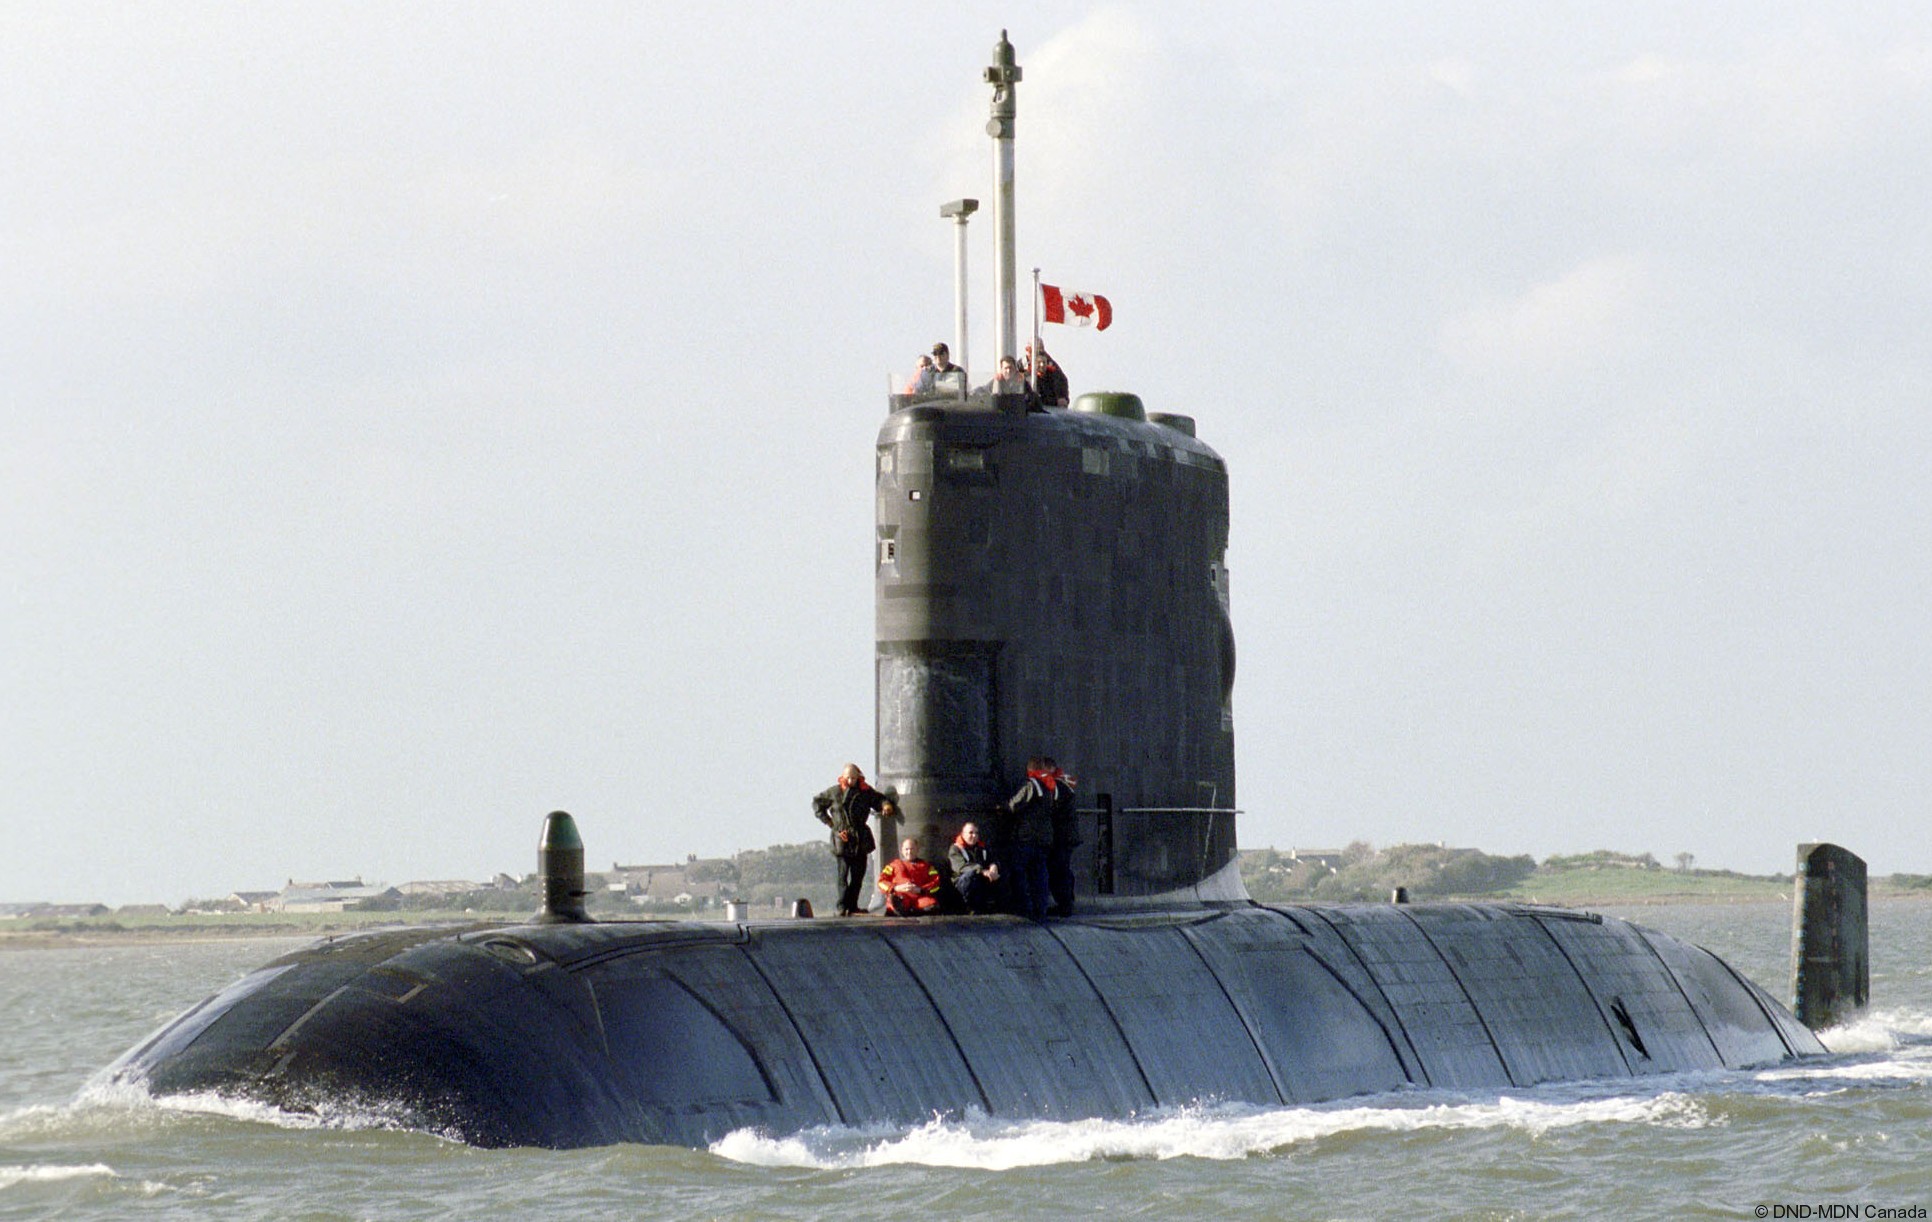 ssk-877 hmcs windsor victoria upholder class attack submarine hunter killer ncsm royal canadian navy 17